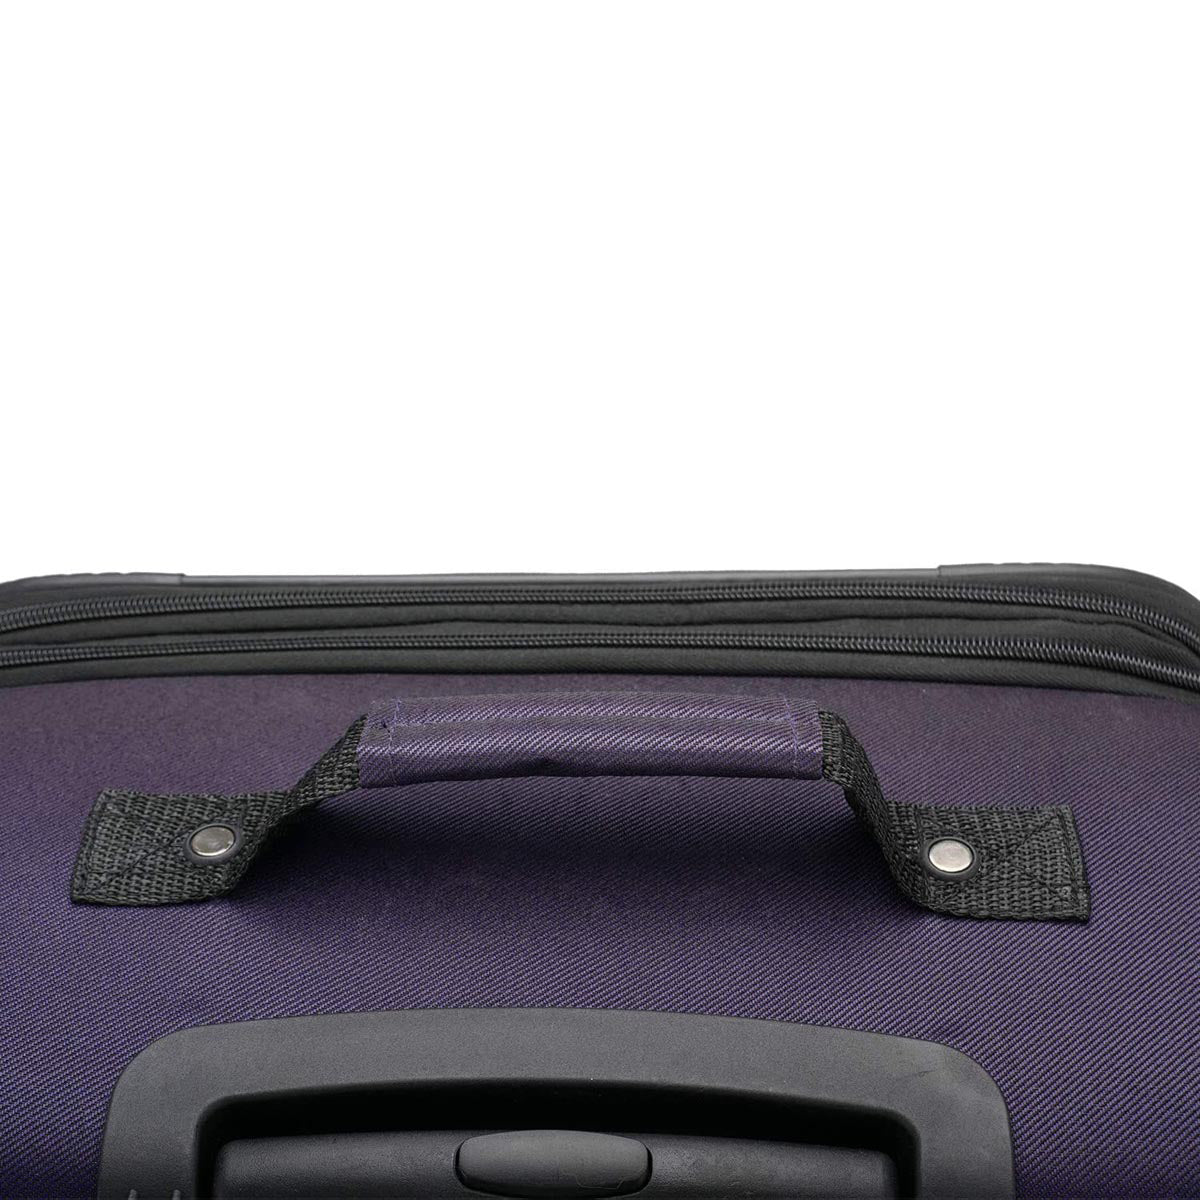 U.S. Traveler Aviron Bay Expandable Softside Luggage with Spinner Wheels, 3 Piece